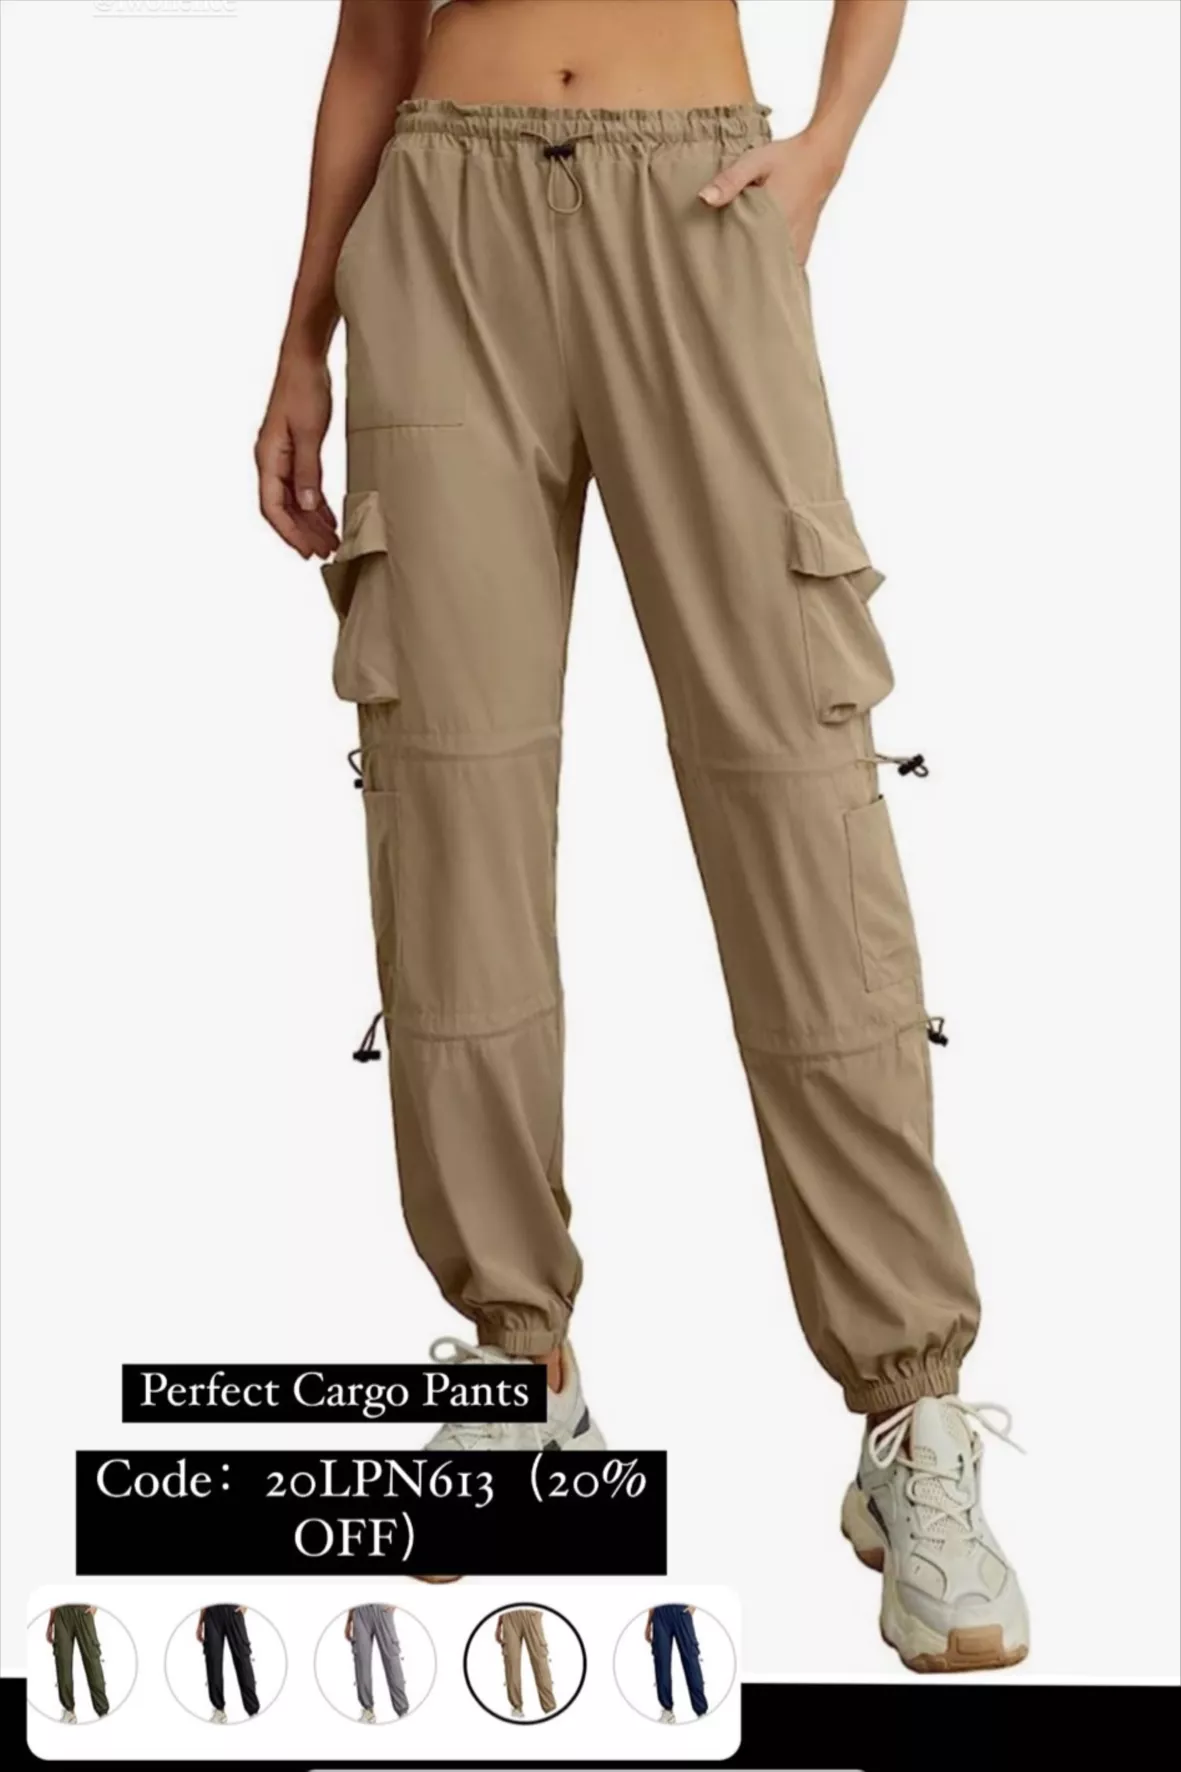 Pin on Cargo pants women